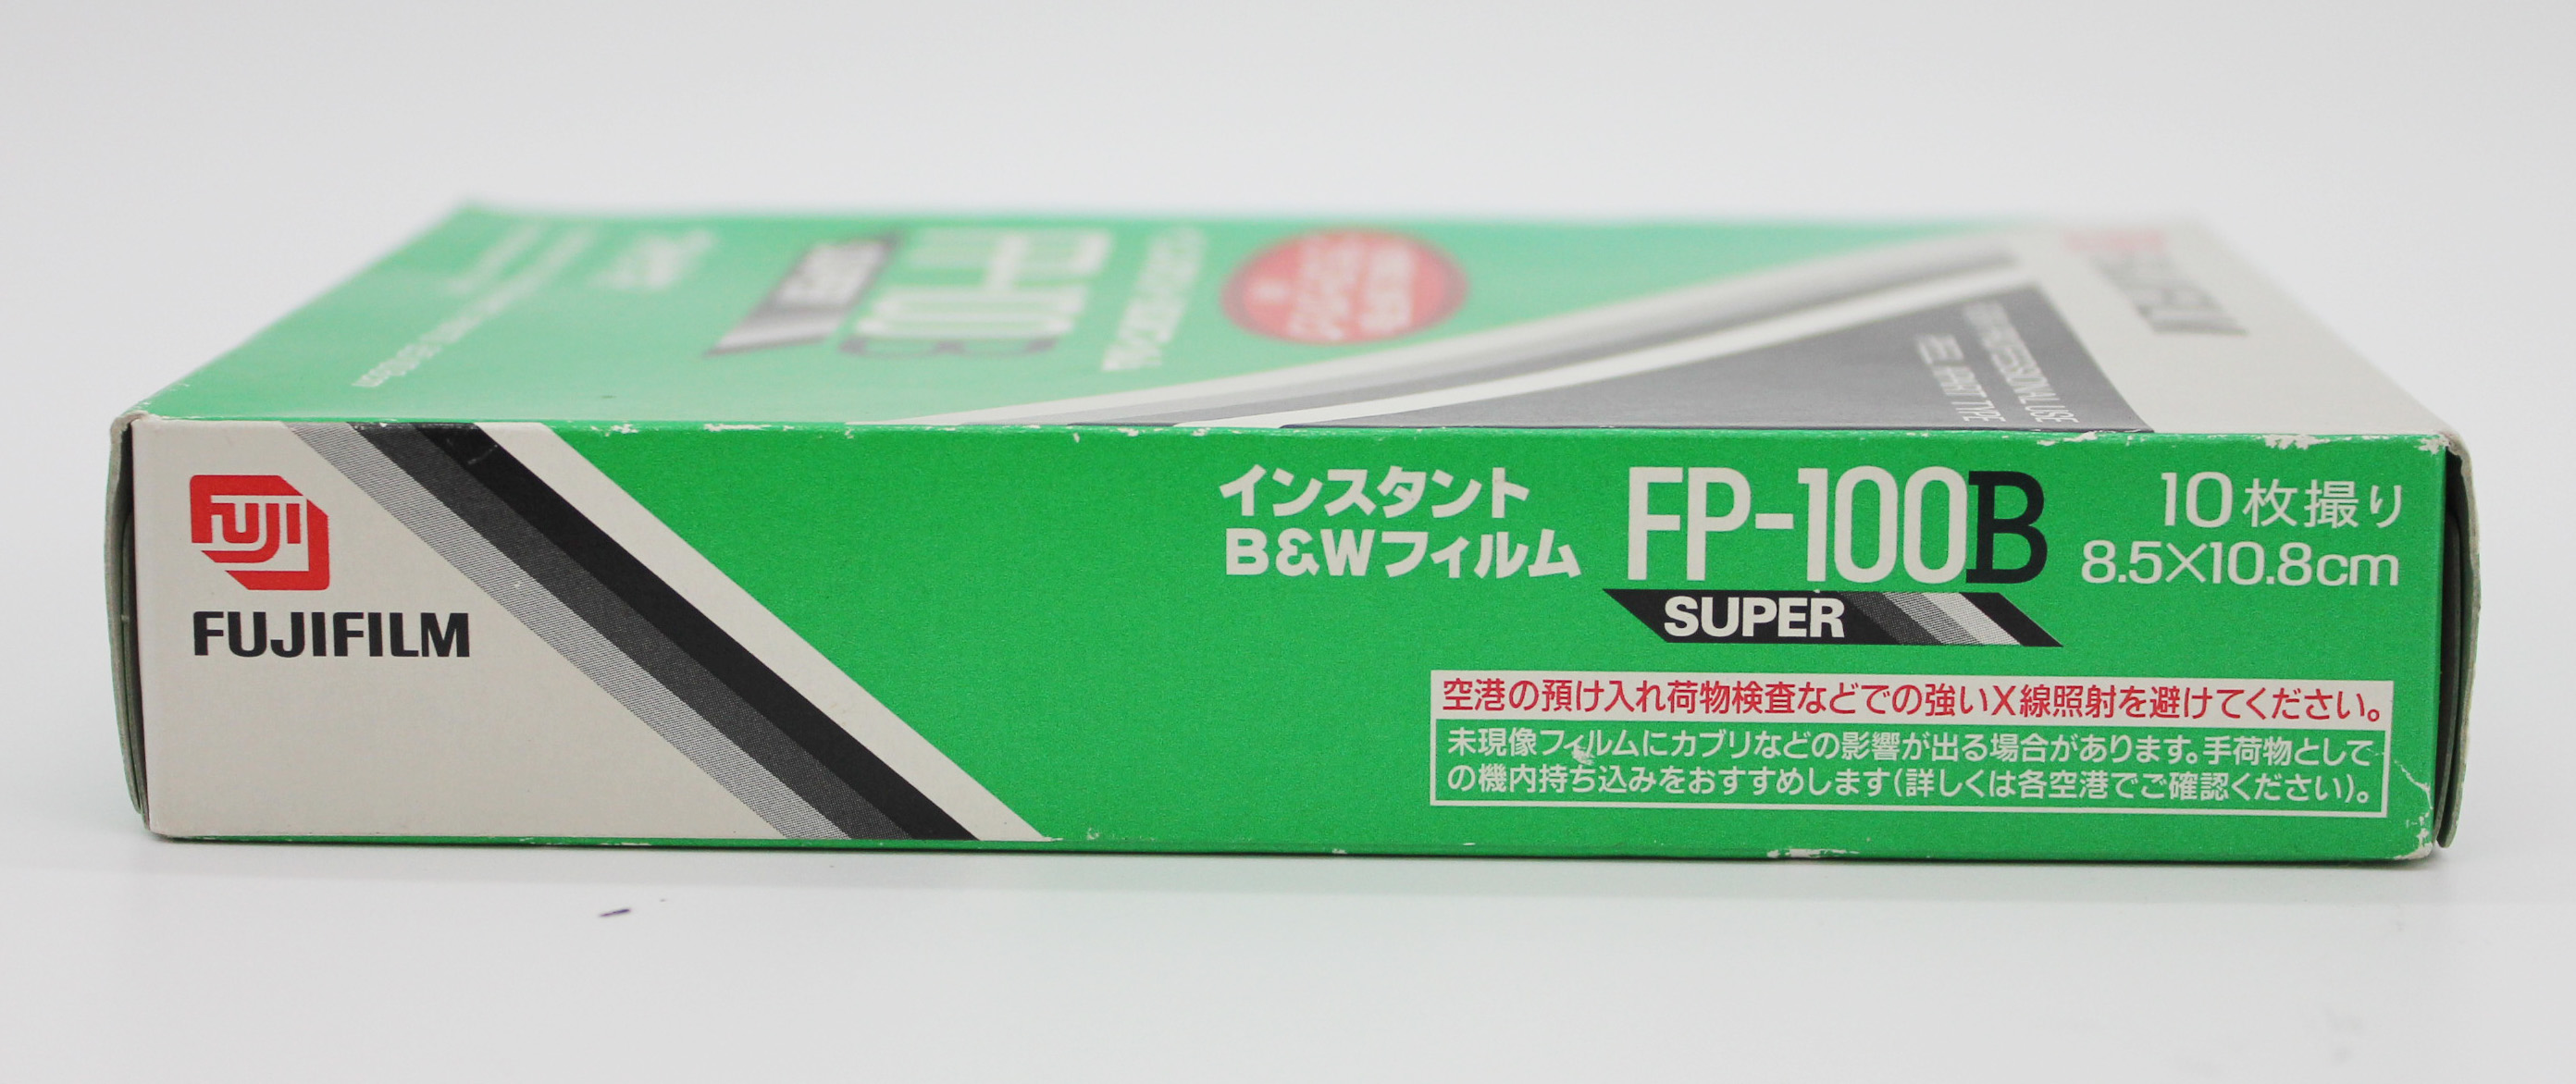  Fujifilm FP-100B Instant Black & White Film (Expired 09/2004) from Japan Photo 5